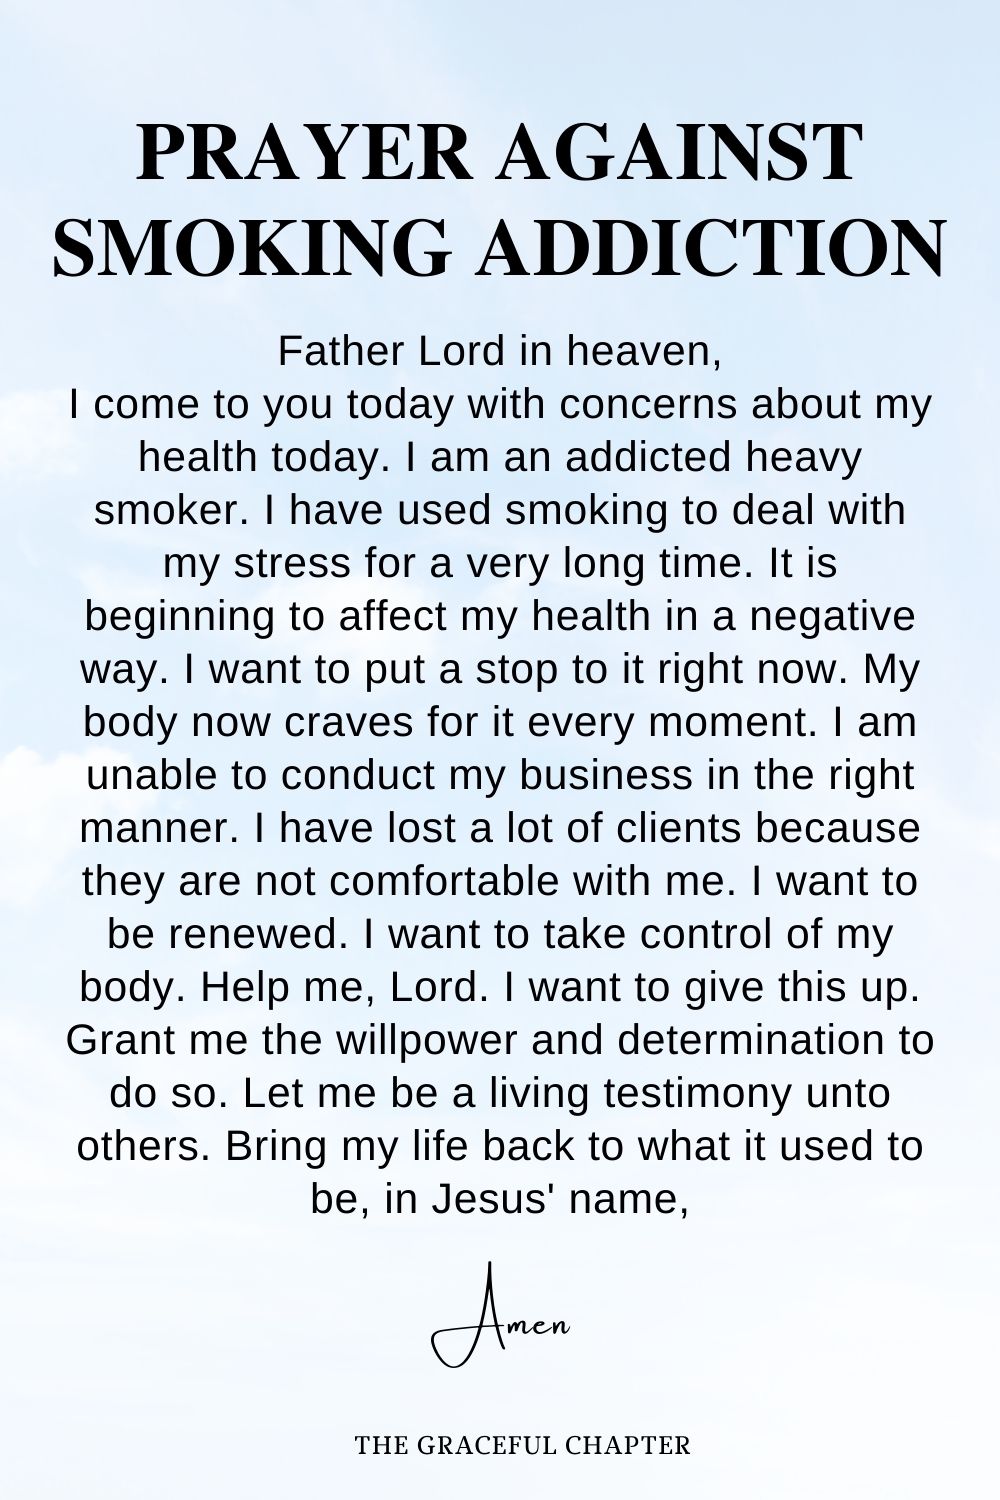 Prayer against Smoking Addiction - prayers against addiction